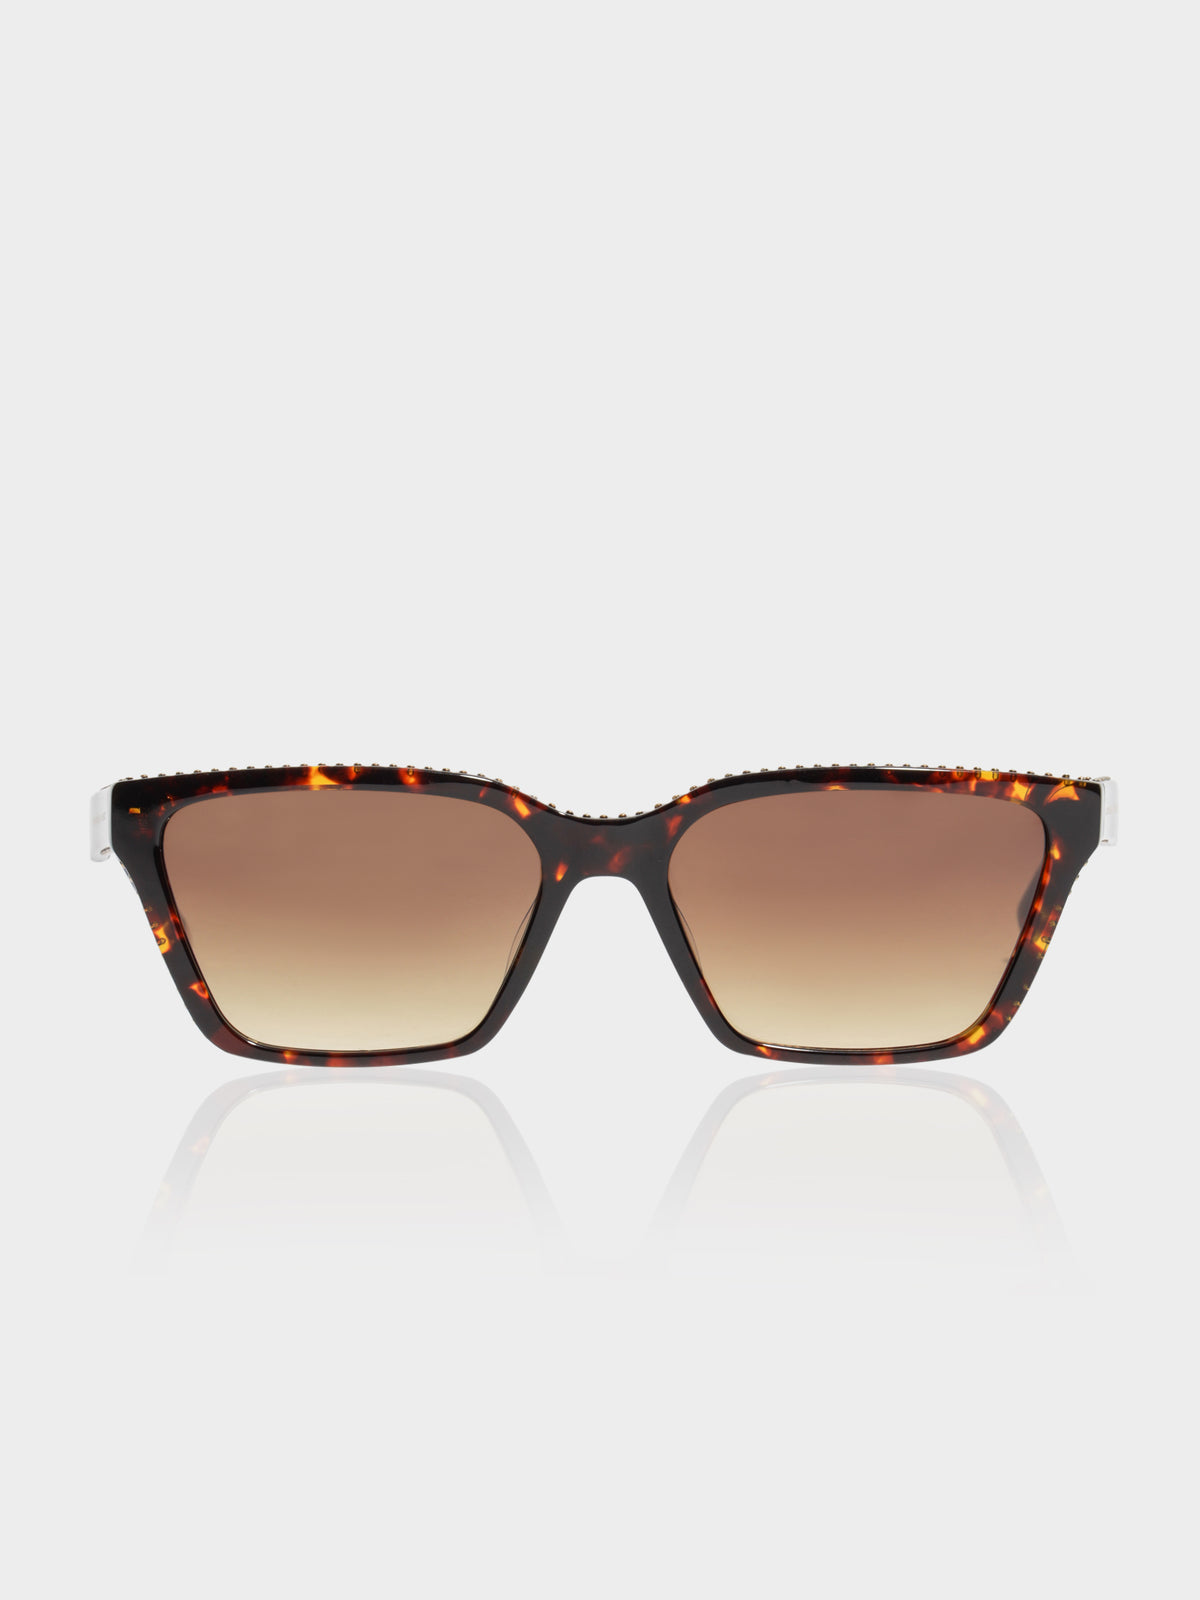 CL7843 Nox Sunglasses in Tortoiseshell